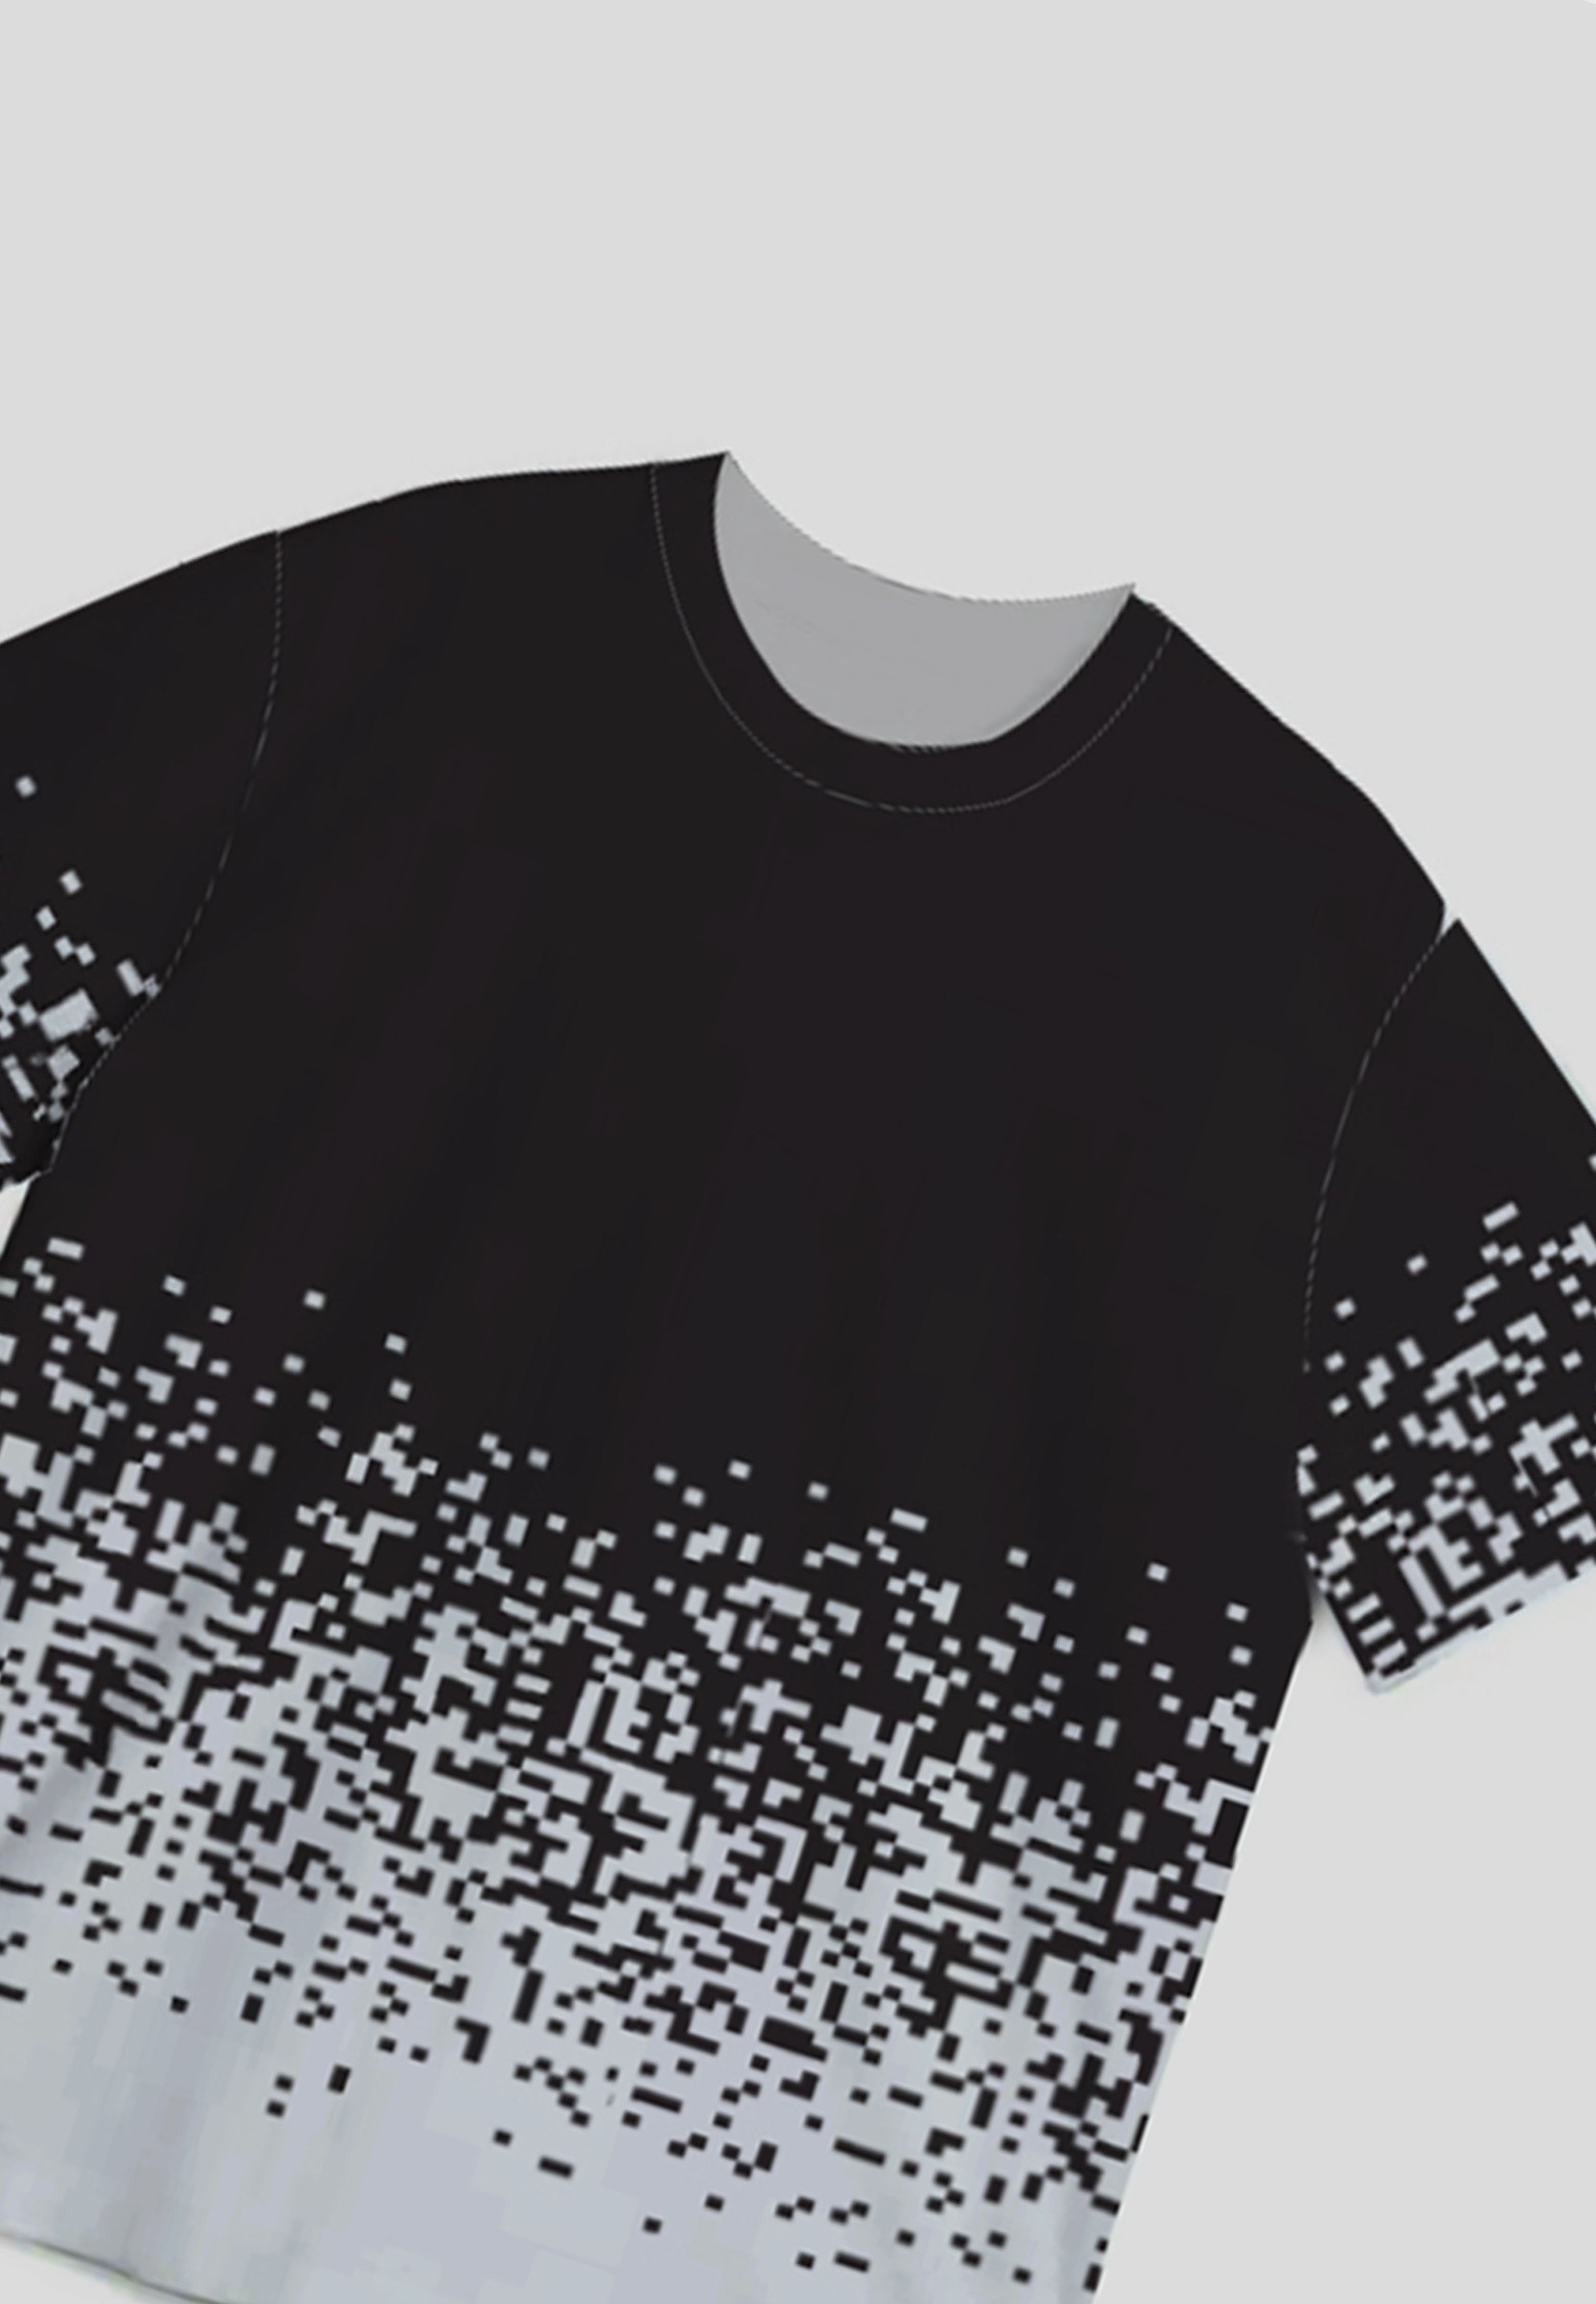 NX013 kaos oversize efek knit rajut star dust hitam putih